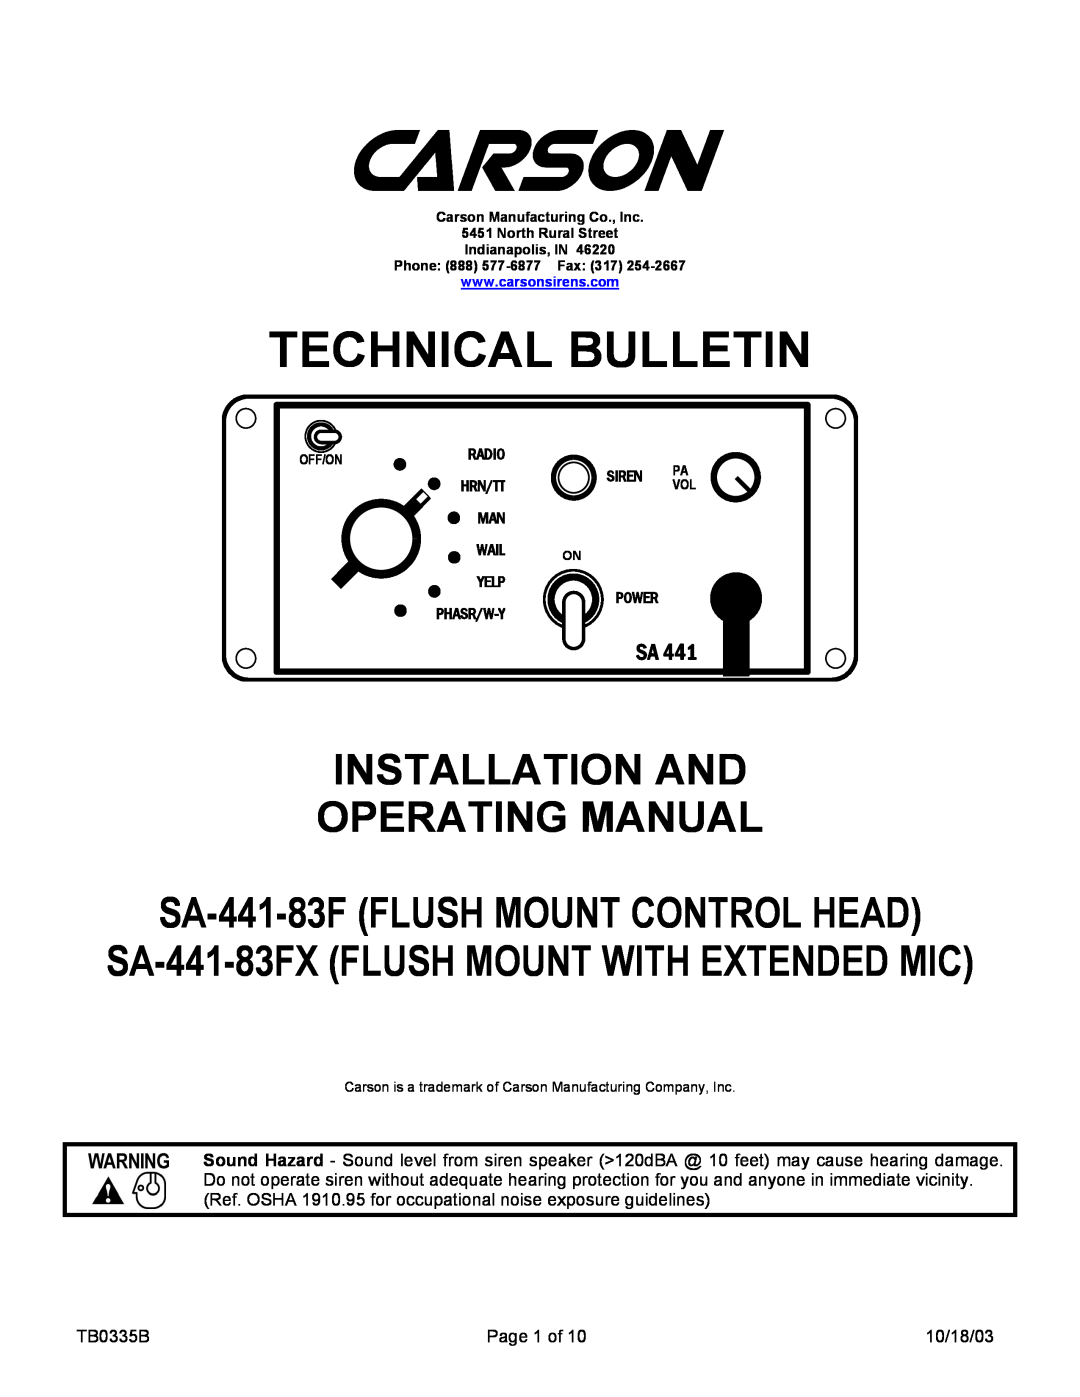 Carson SA-441-83FX manual Technical Bulletin, INSTALLATION AND OPERATING MANUAL SA-441-83F FLUSH MOUNT CONTROL HEAD 